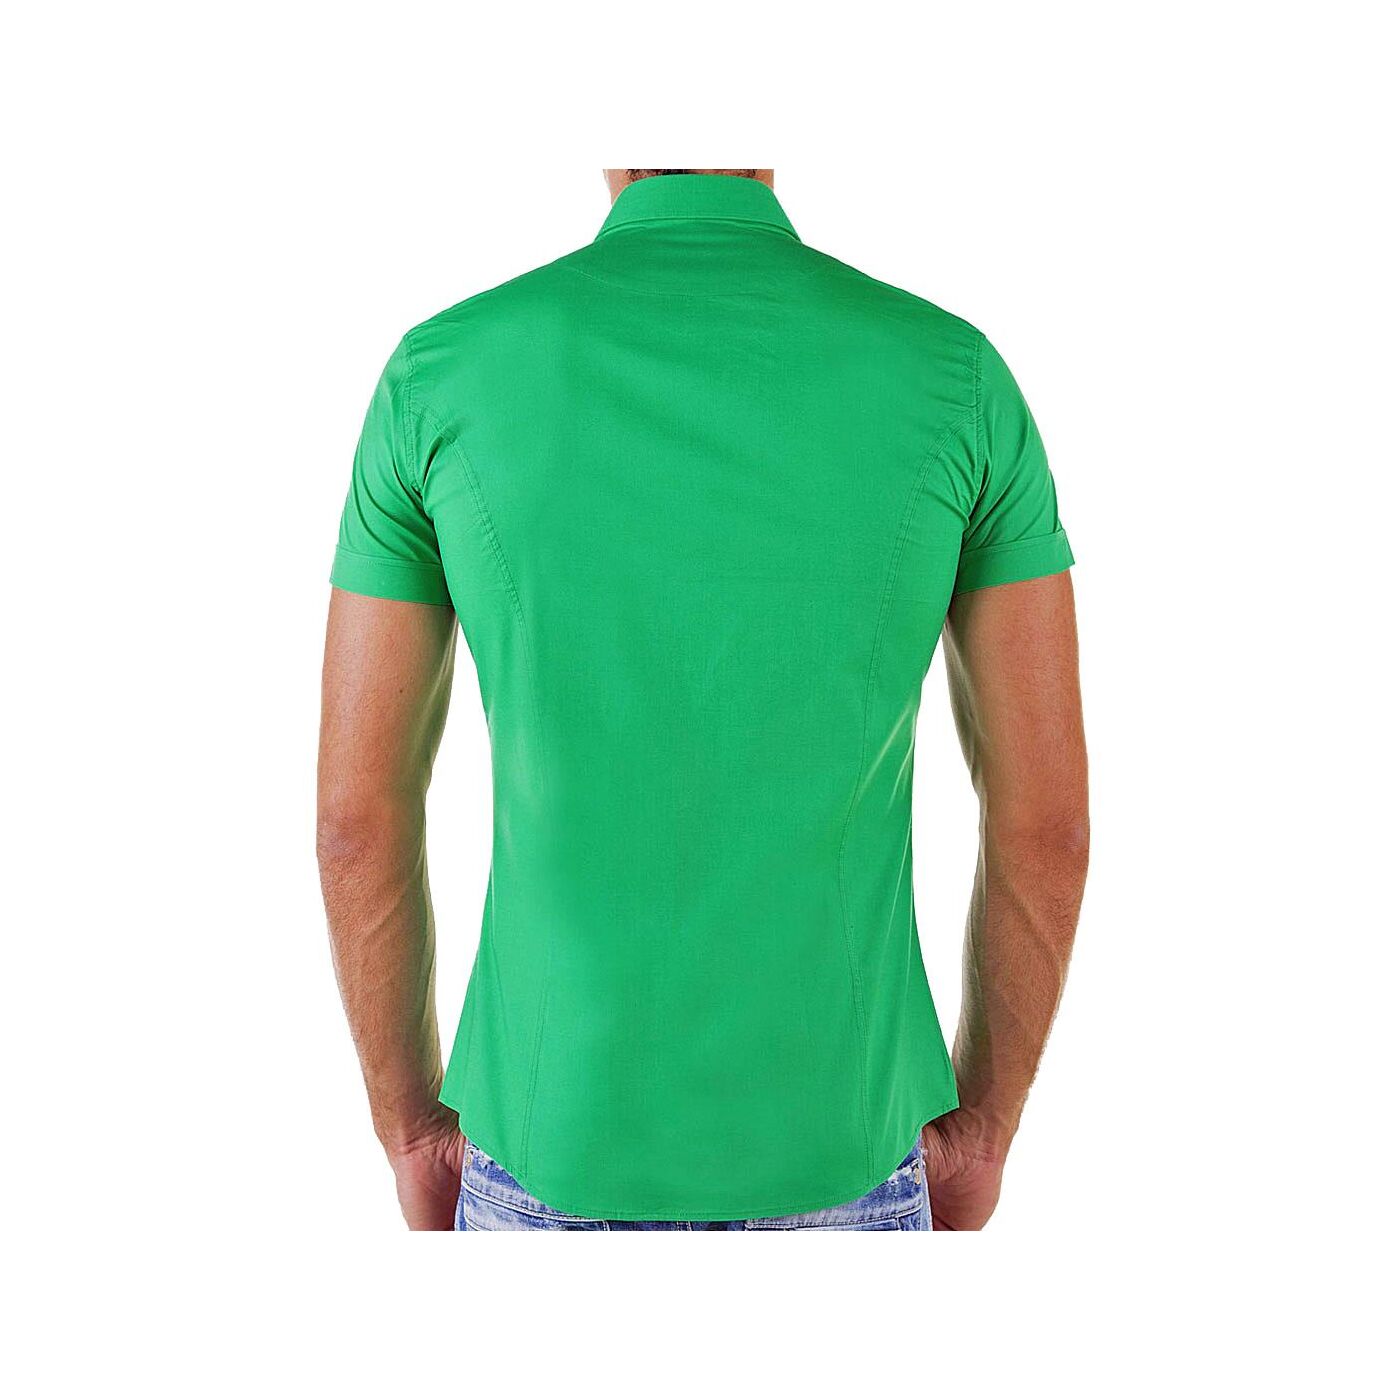 Red Bridge Herren Basic Design Slim Fit kurzarm Hemd grün R-2156 - Re, €  24,90